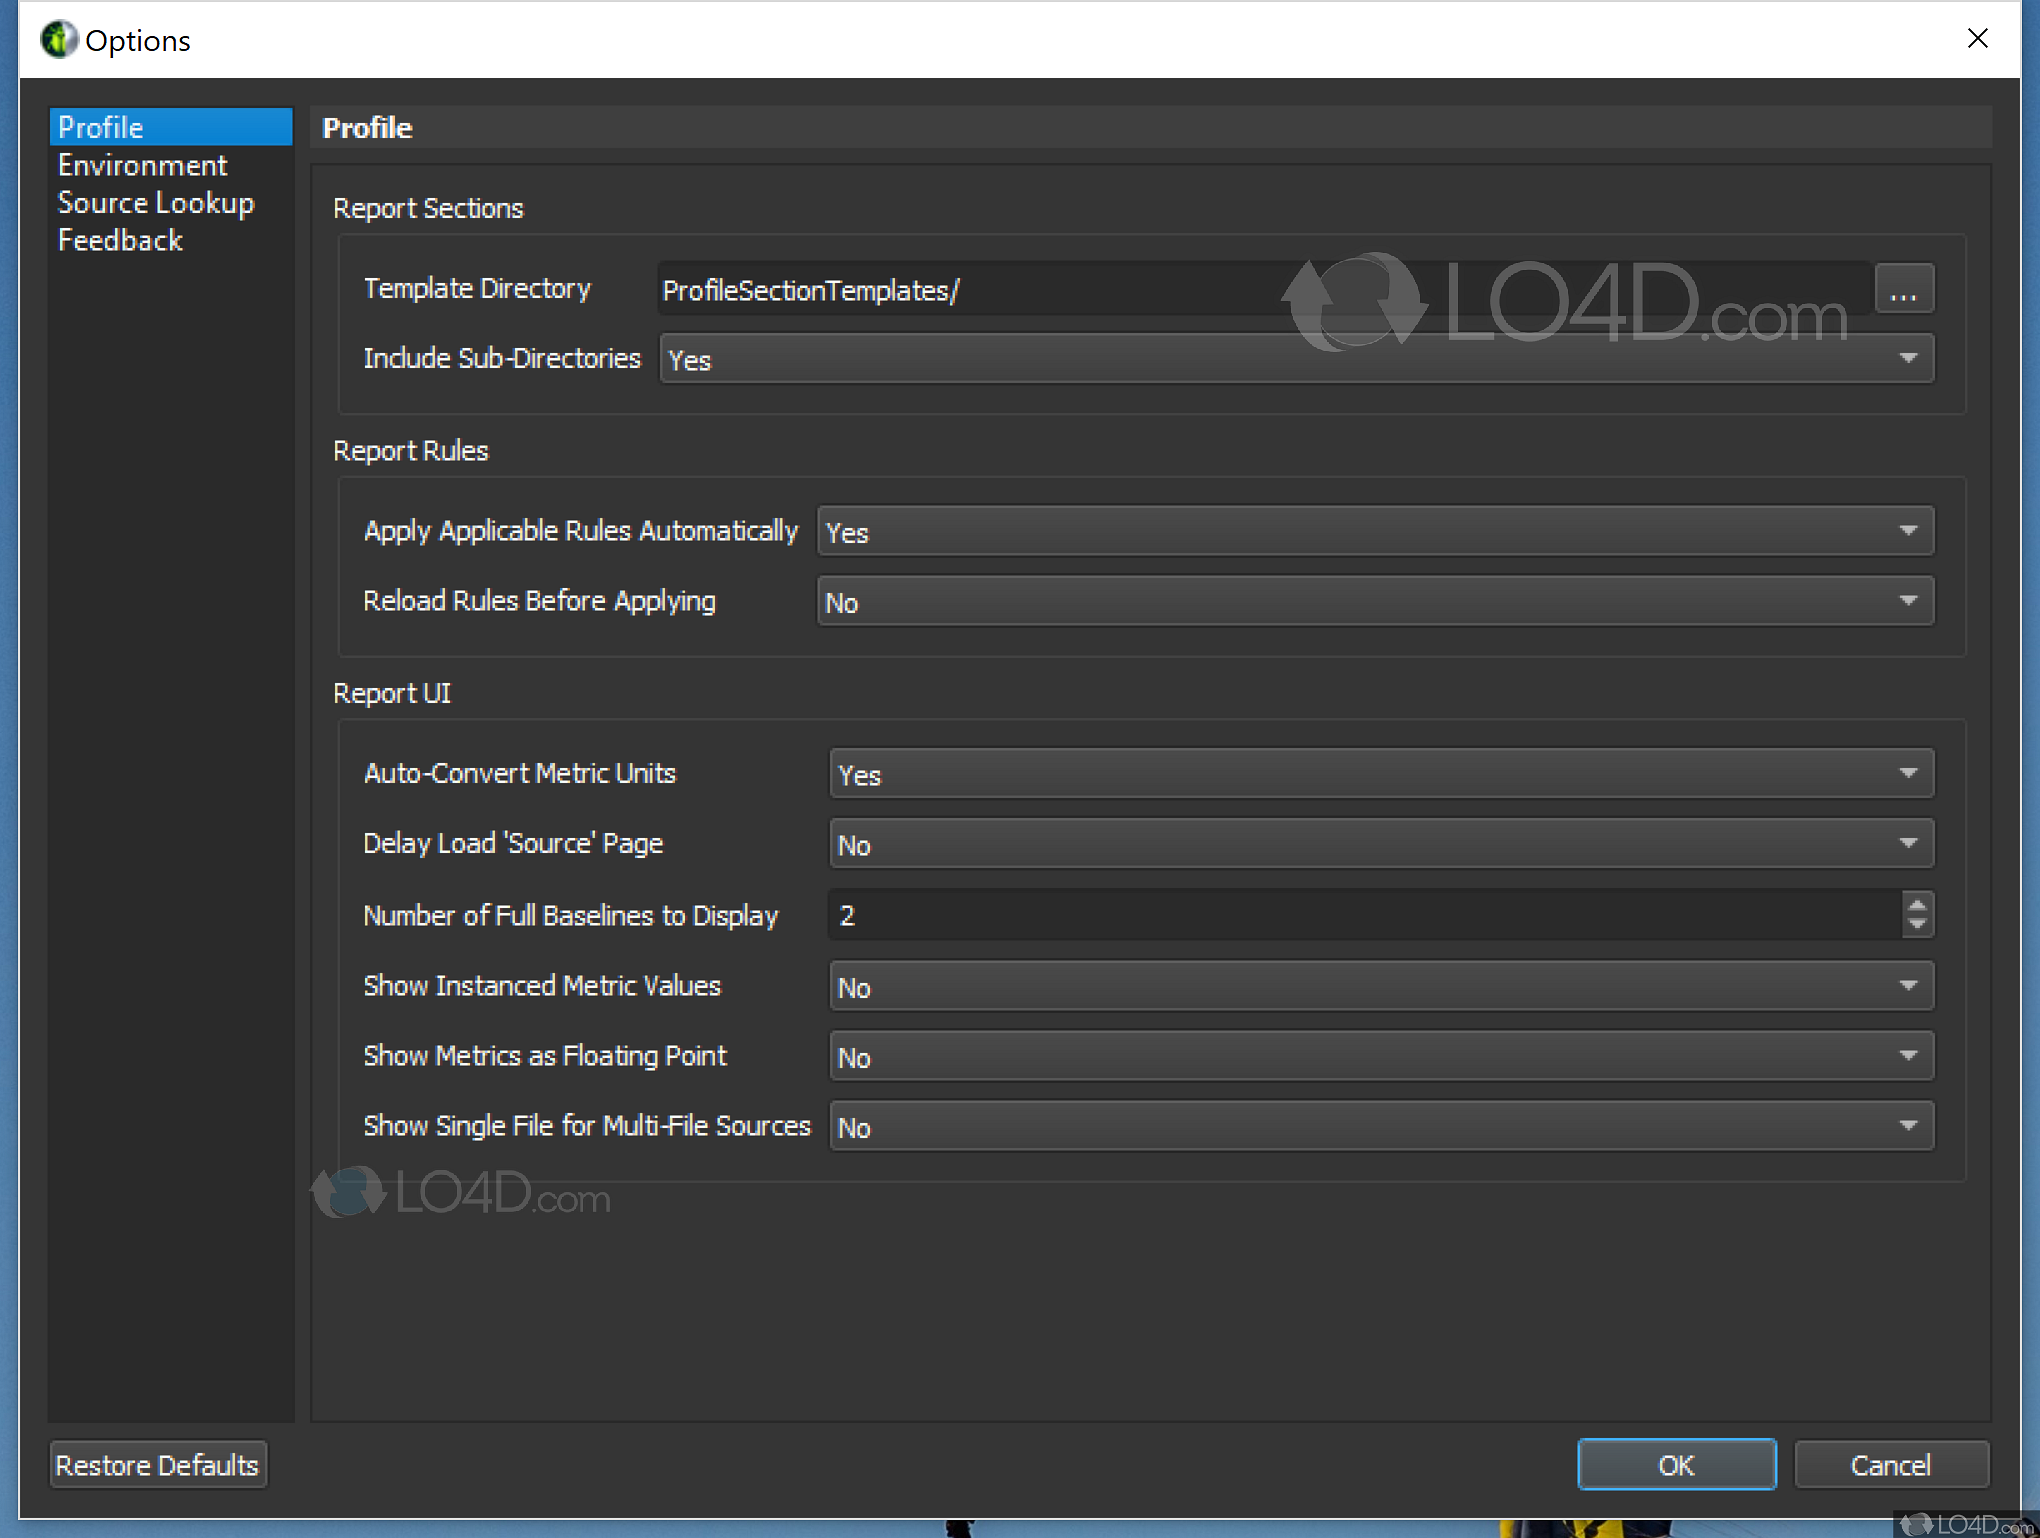 nvidia cuda toolkit 9.0 visual studio